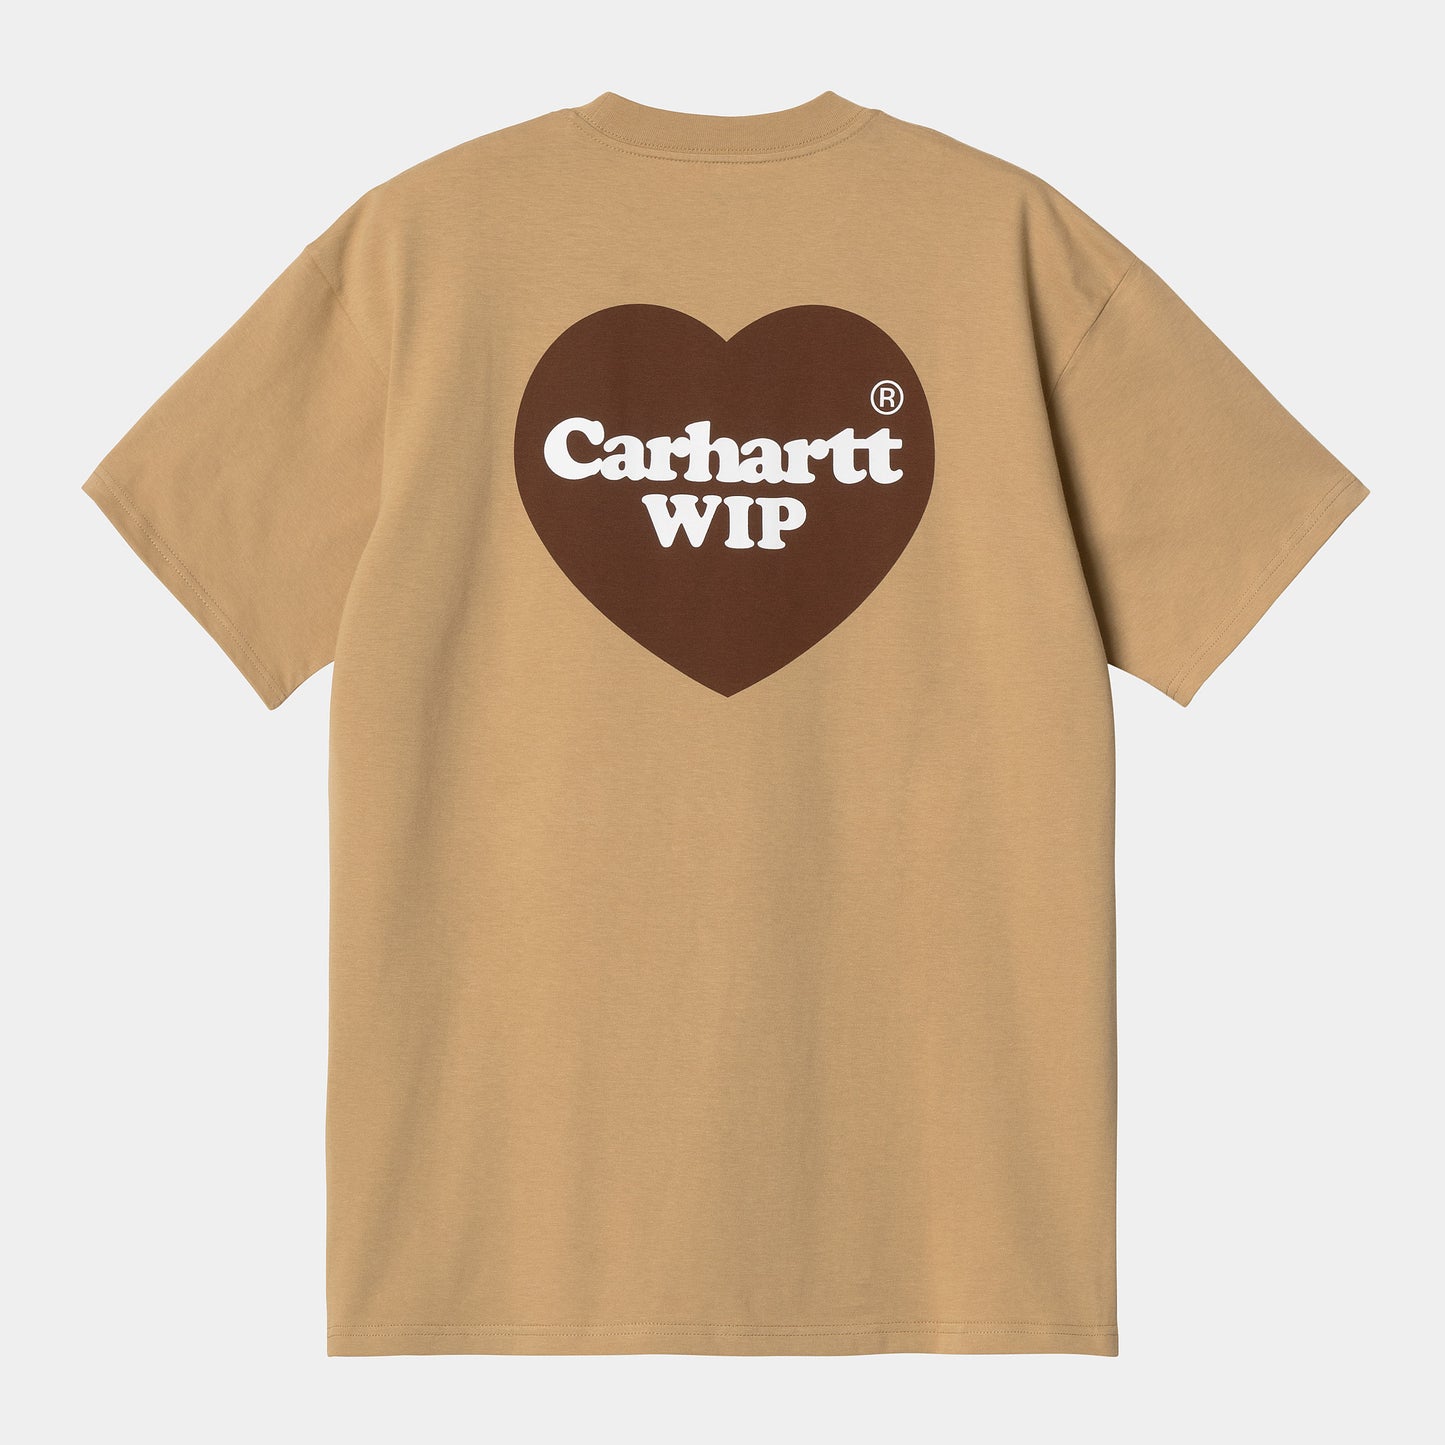 CARHARTT WIP SS DOUBLE HEART T-SHIRT - Dusty Hamilton Brown